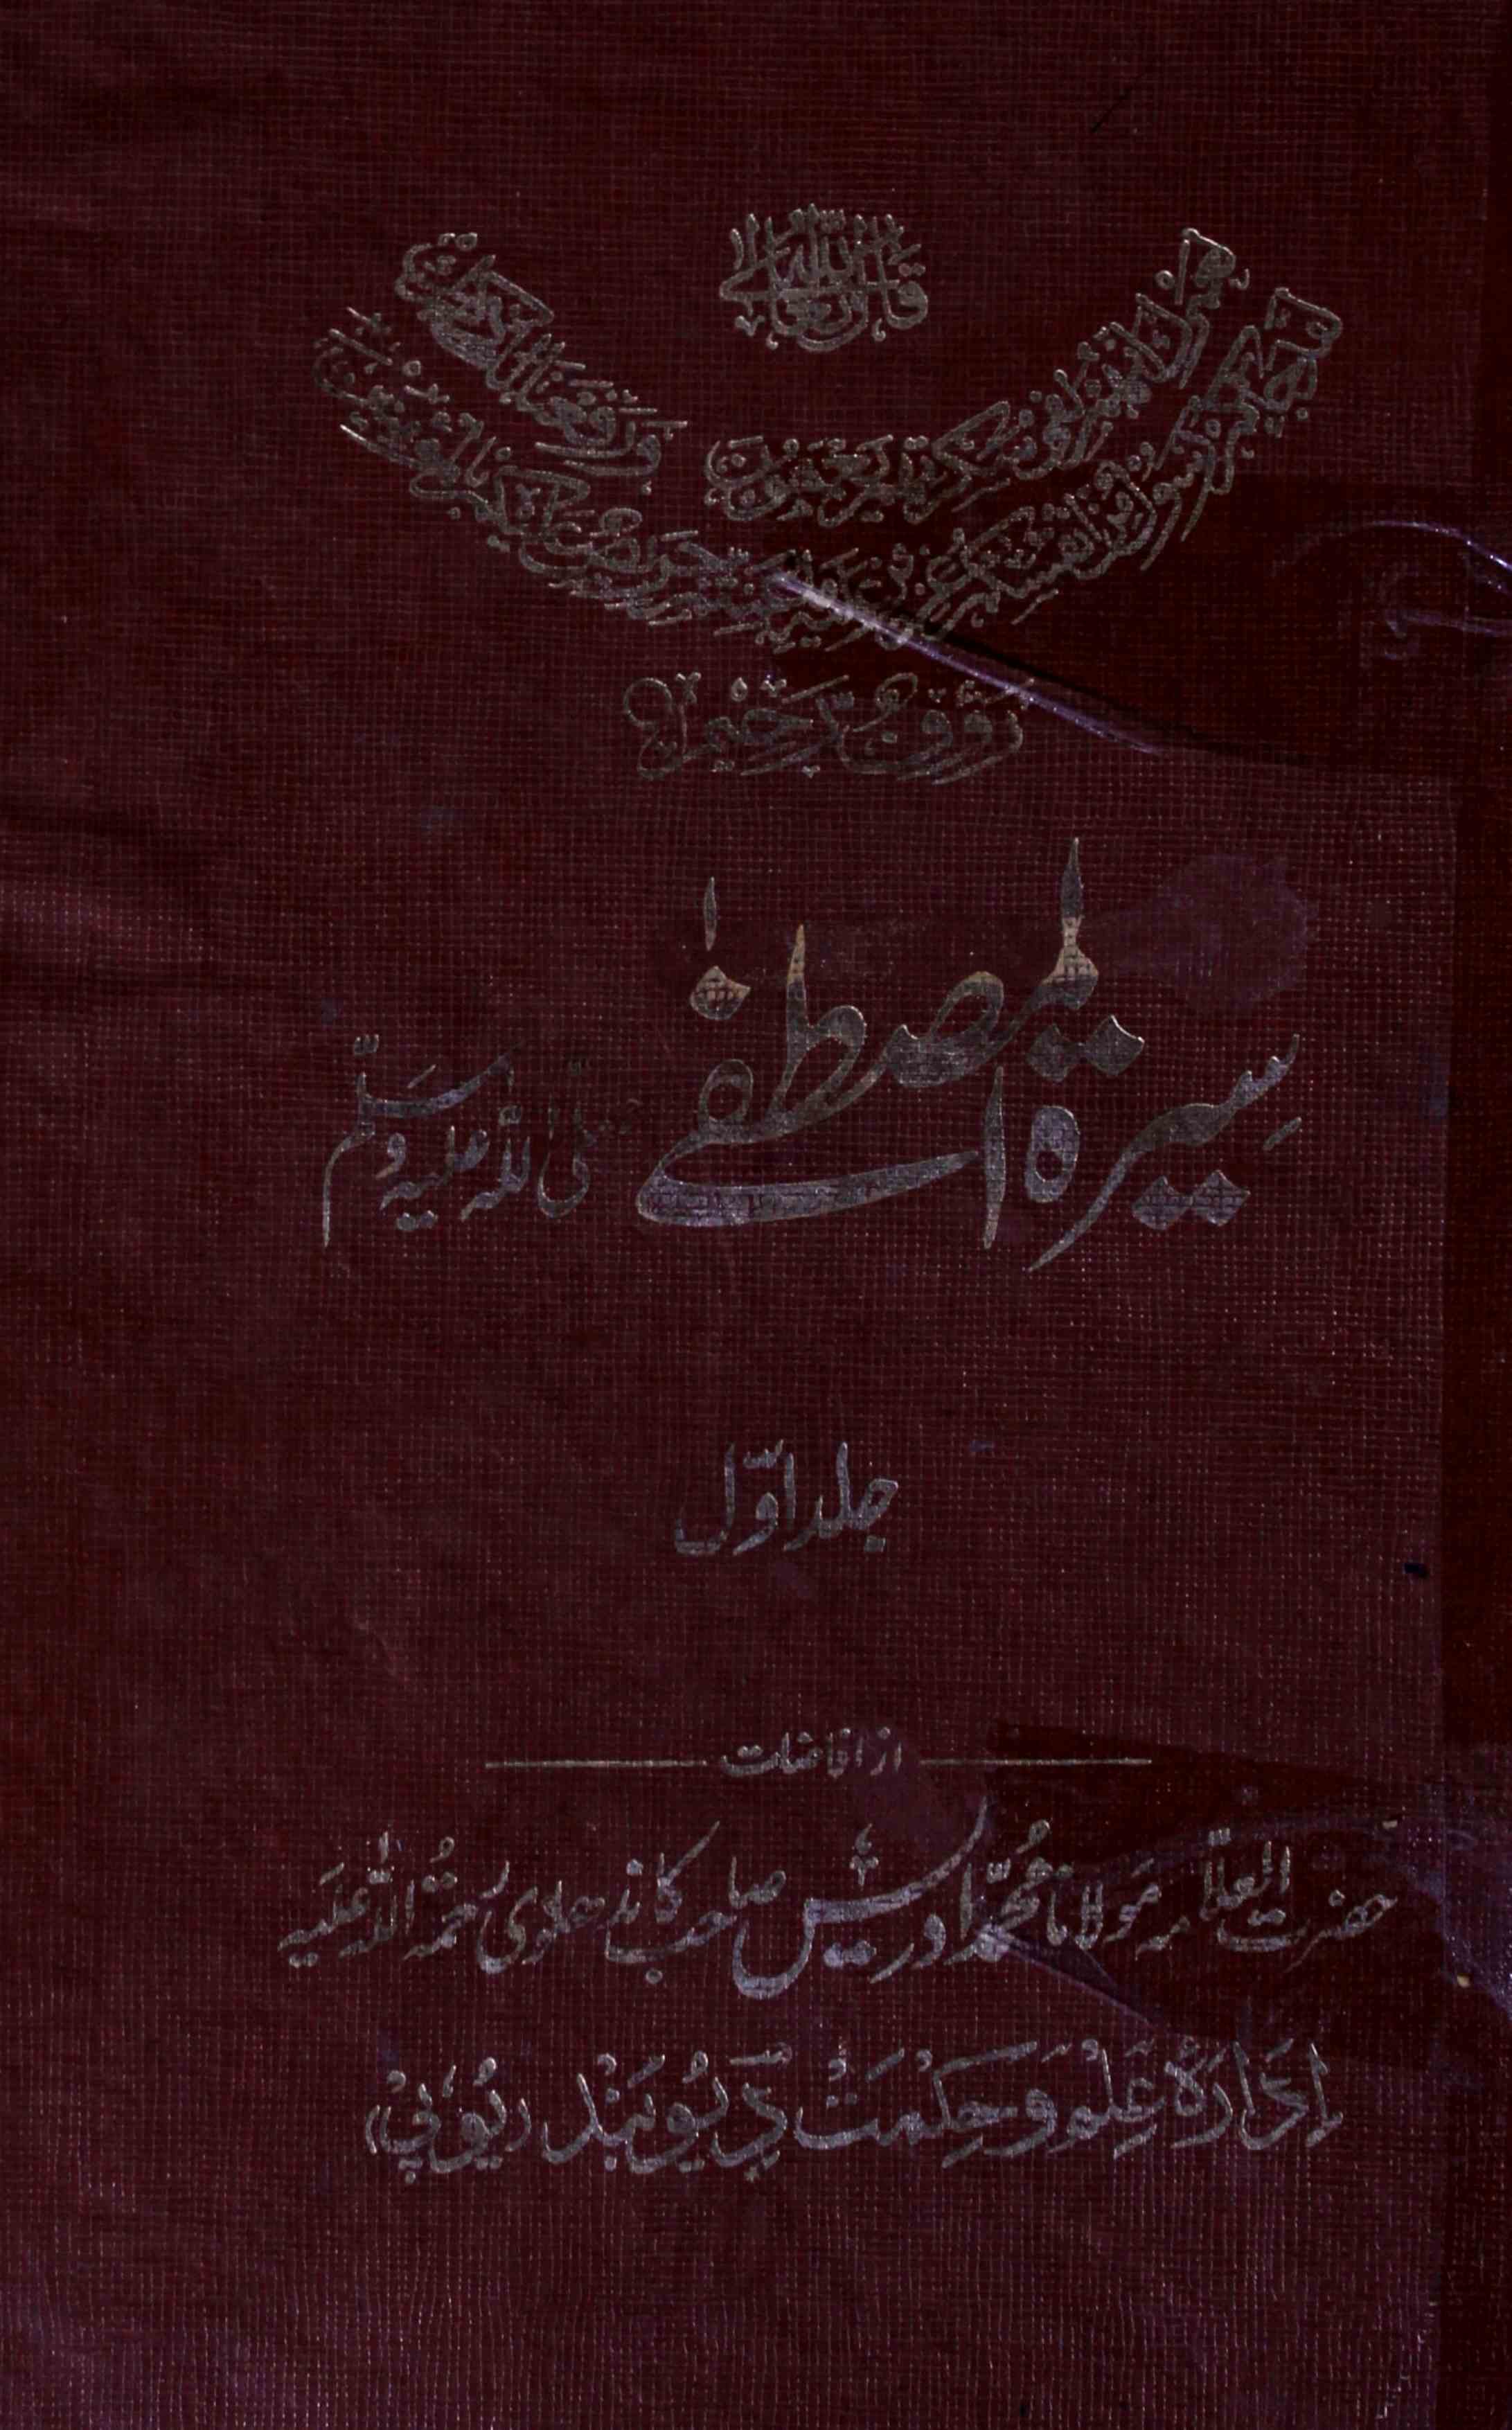 Seerat-ul-Mustafa S.A.W